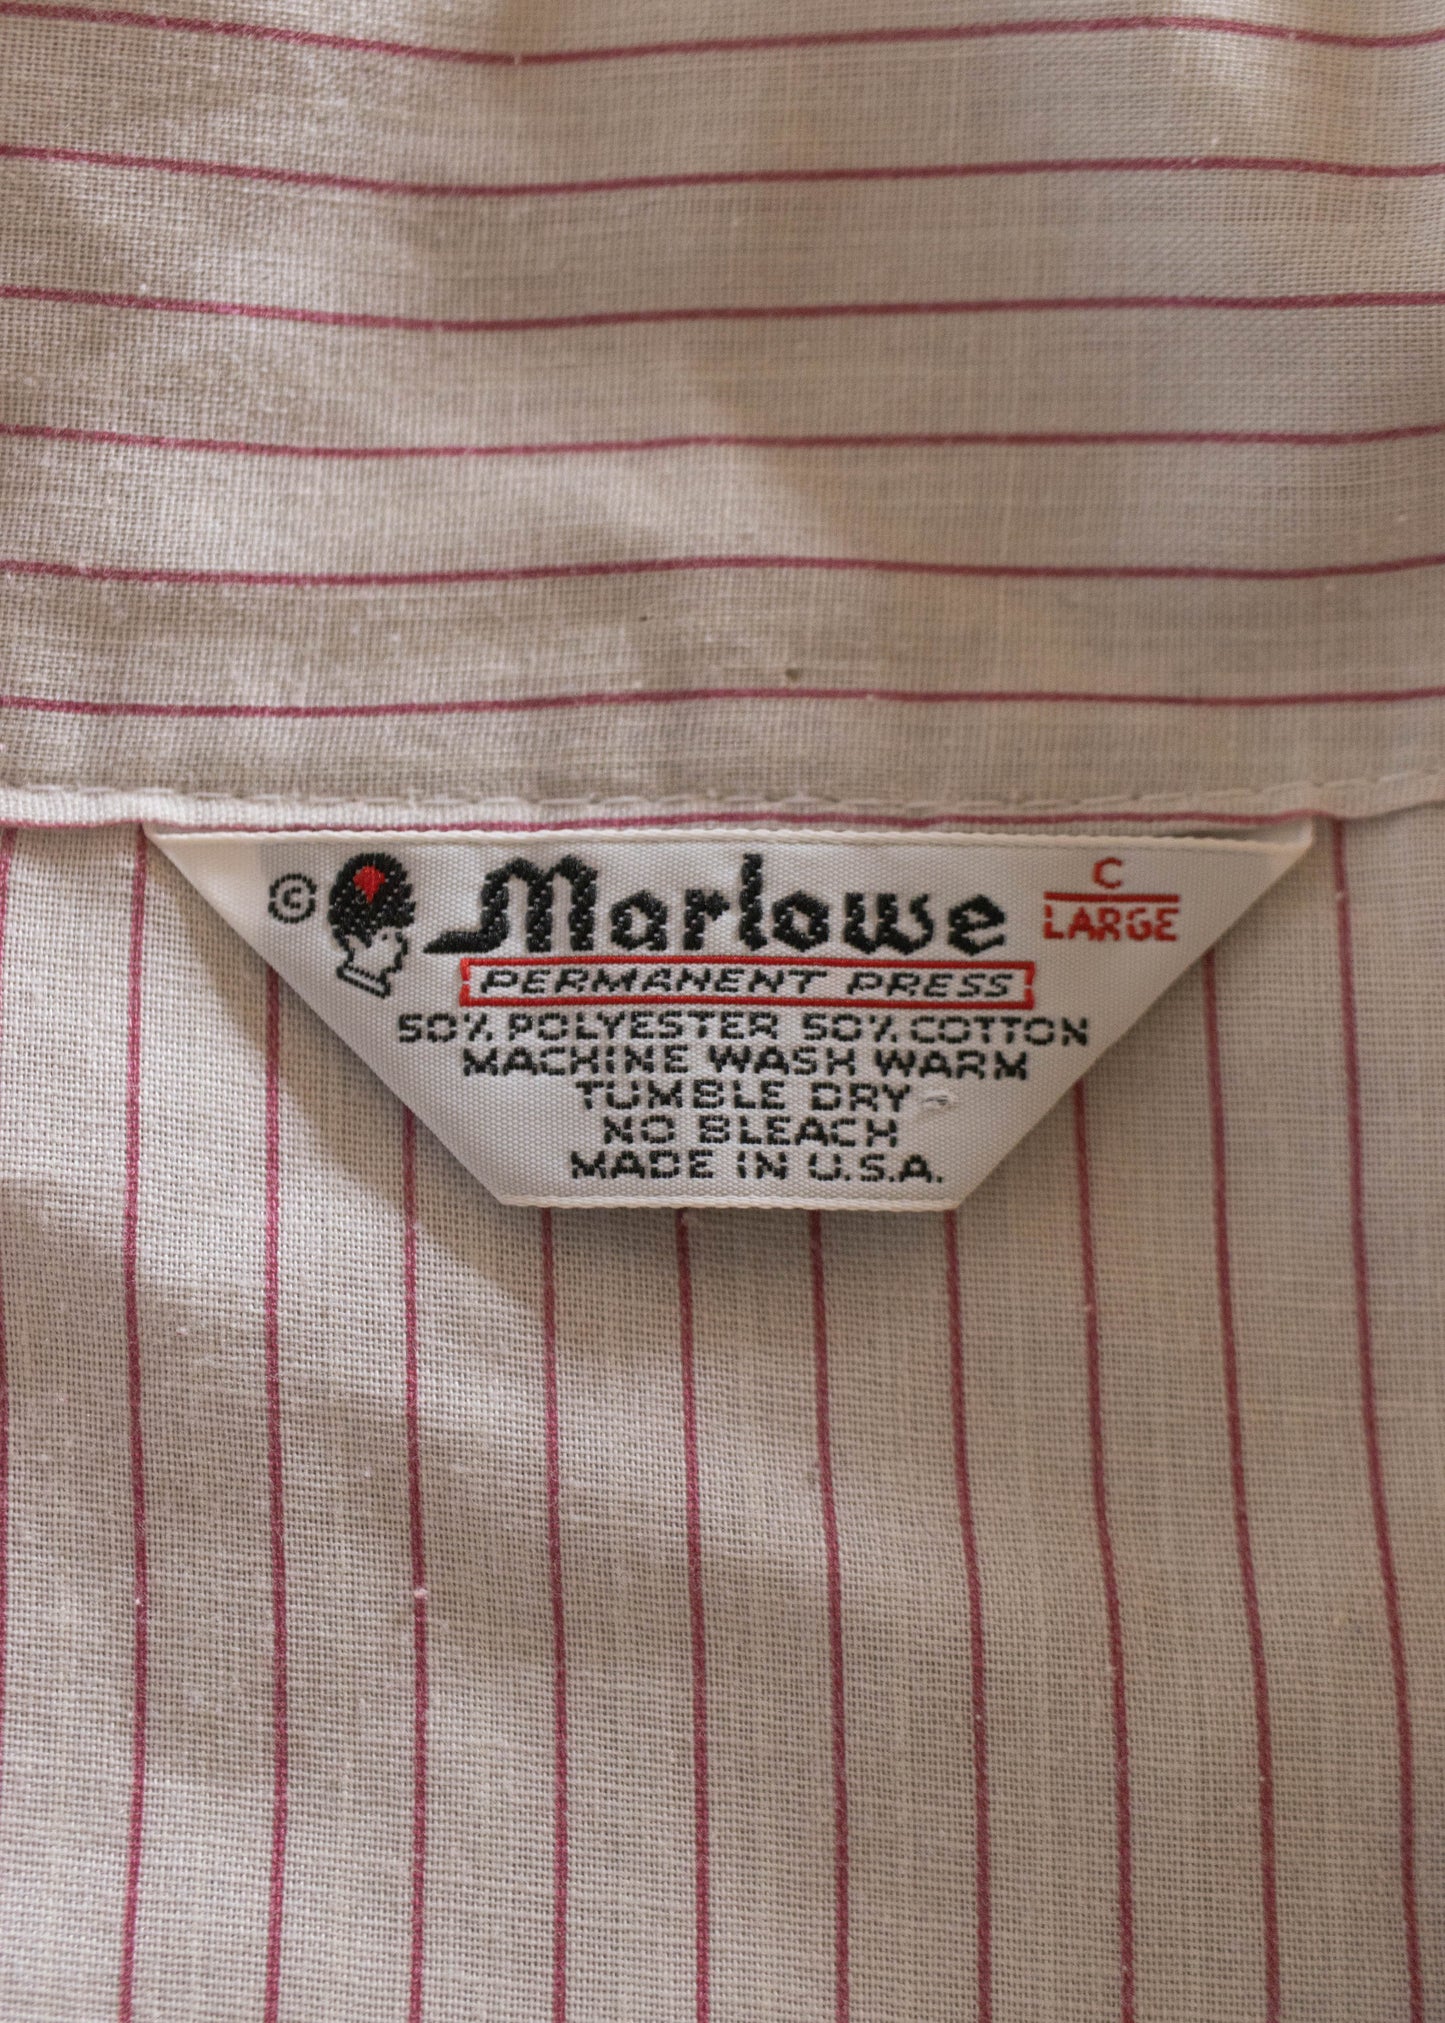 1970s Marlowe Stripe Pattern Long Sleeve Button Up Pajama Shirt Size XL/2XL